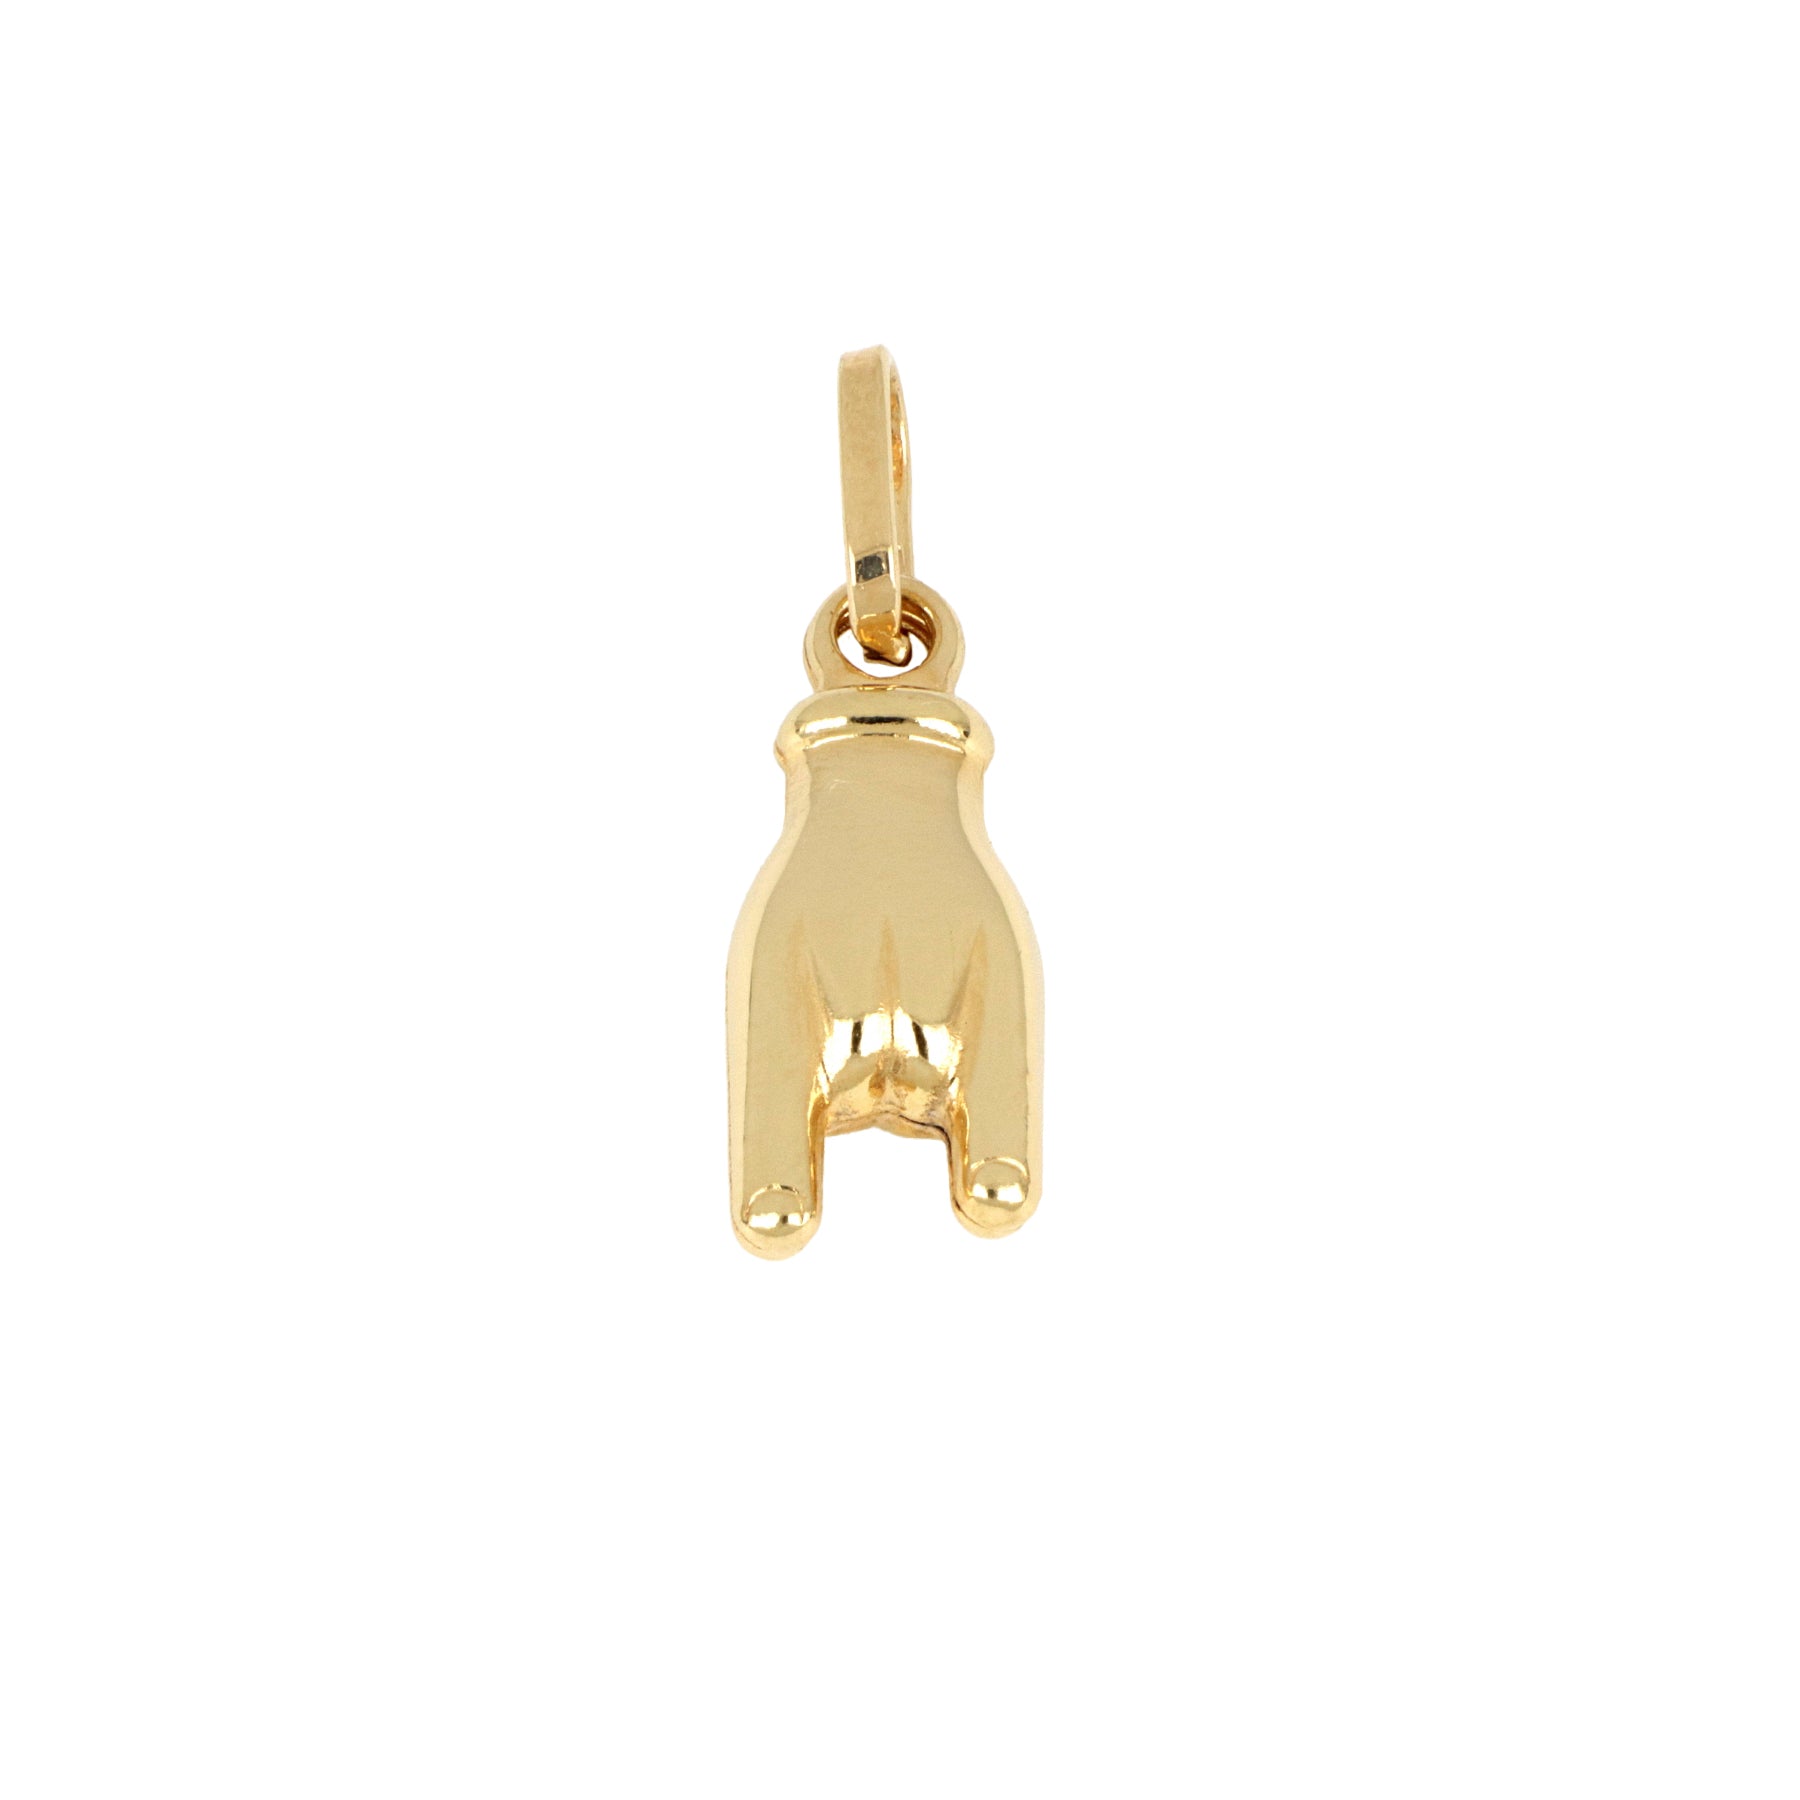 18 kt yellow gold Italian good luck talisman charm, to keep the envious people away. Length 2.2 cm.